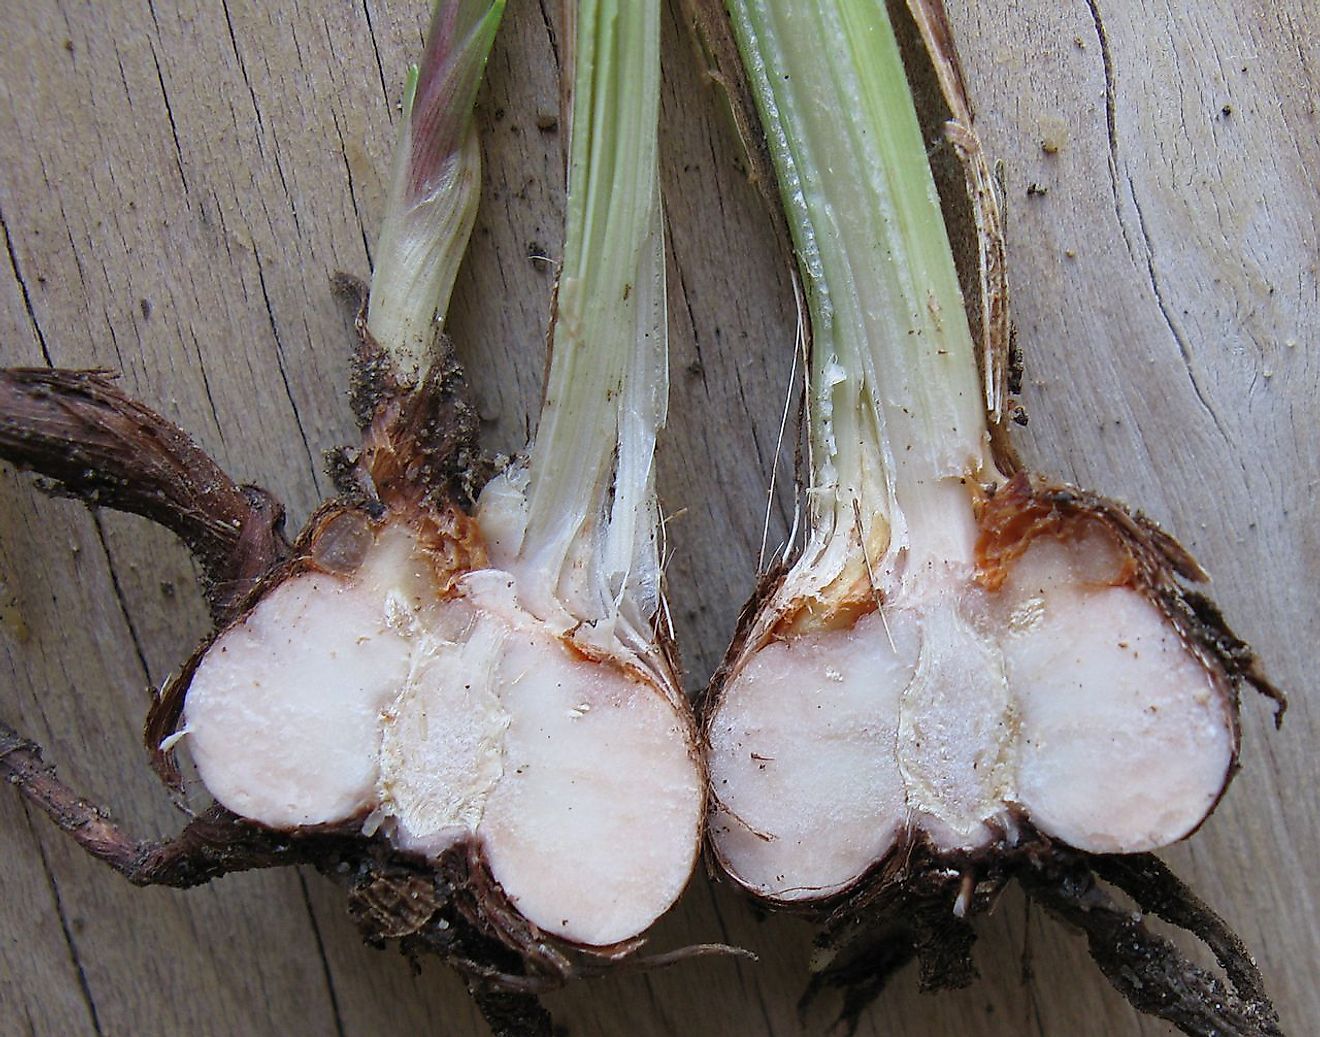 New corm growing from bud, tunic and leaves of Crocosmia. Image credit: JonRichfield/Wikimedia.org